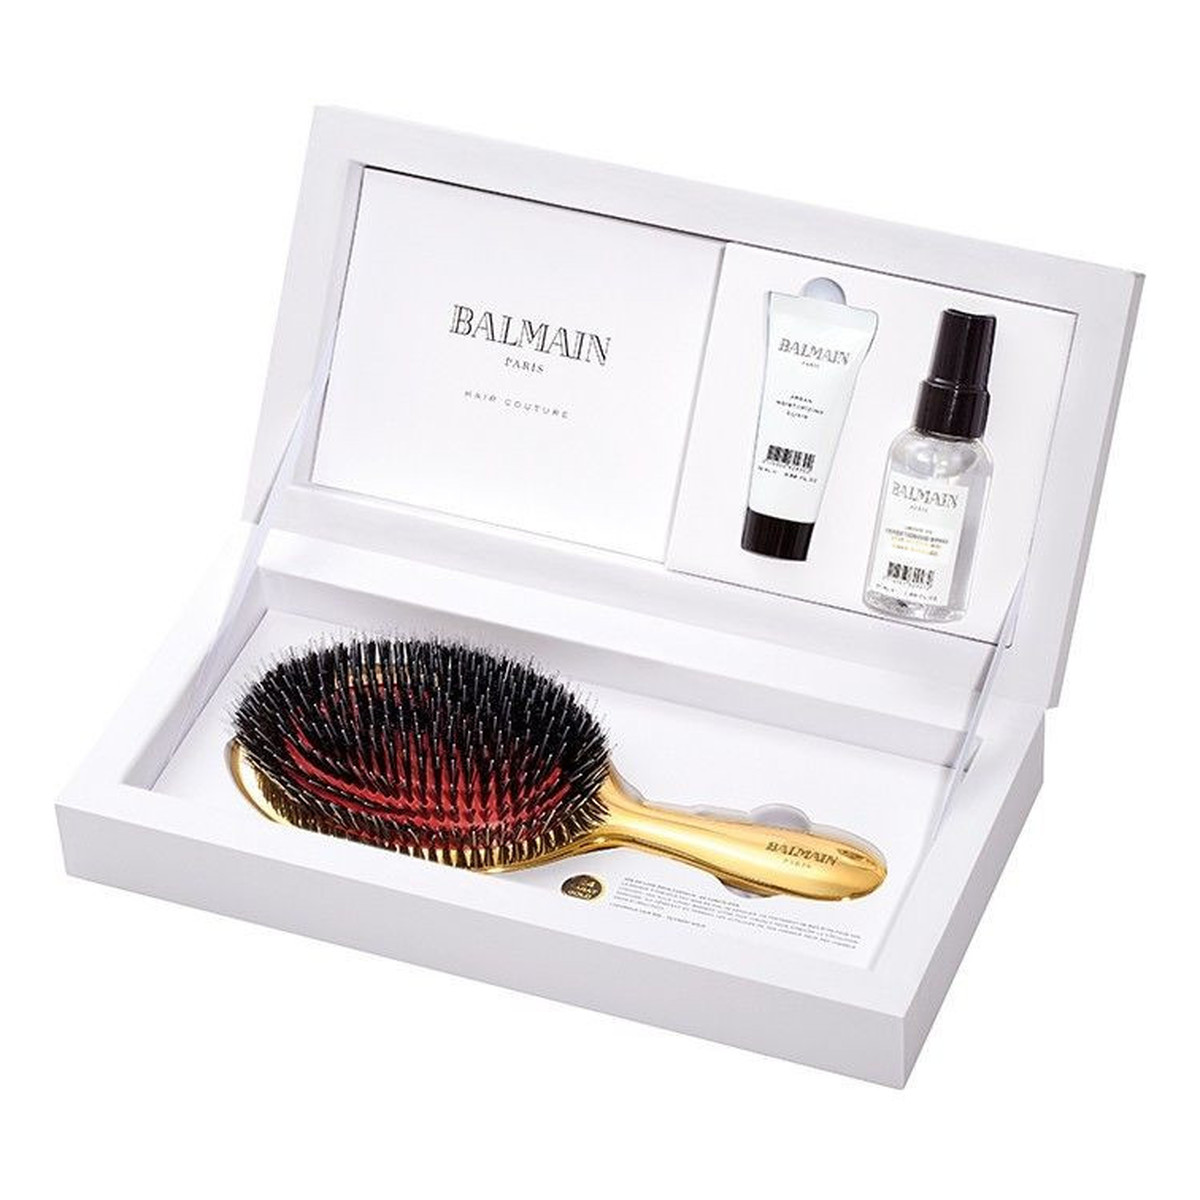 Balmain Golden Boar zestaw (szczotka do włosów + Travel Argan Elixir 20ml+ Travel Leave-In Conditioner 50ml)